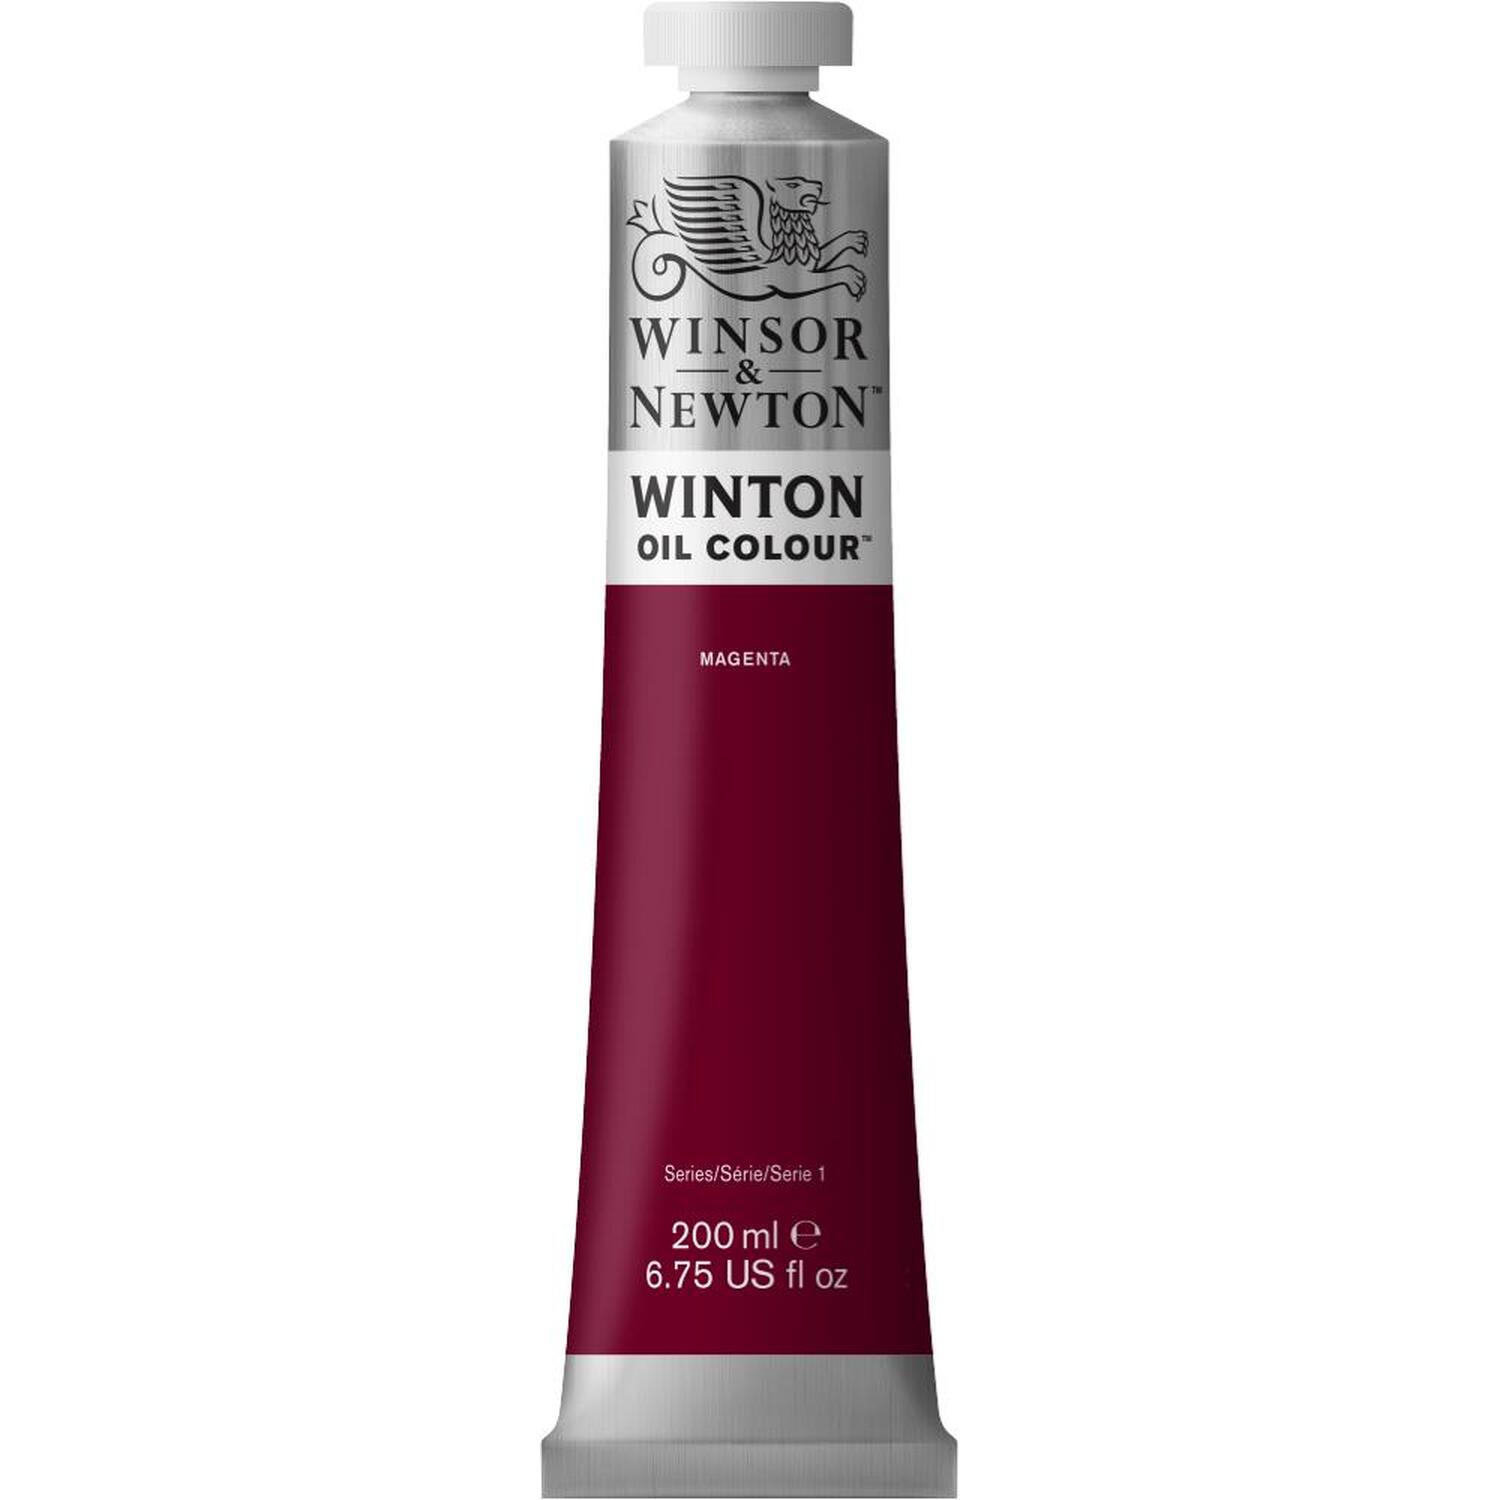 Winsor and Newton 200ml Winton Oil Colours - Magenta Image